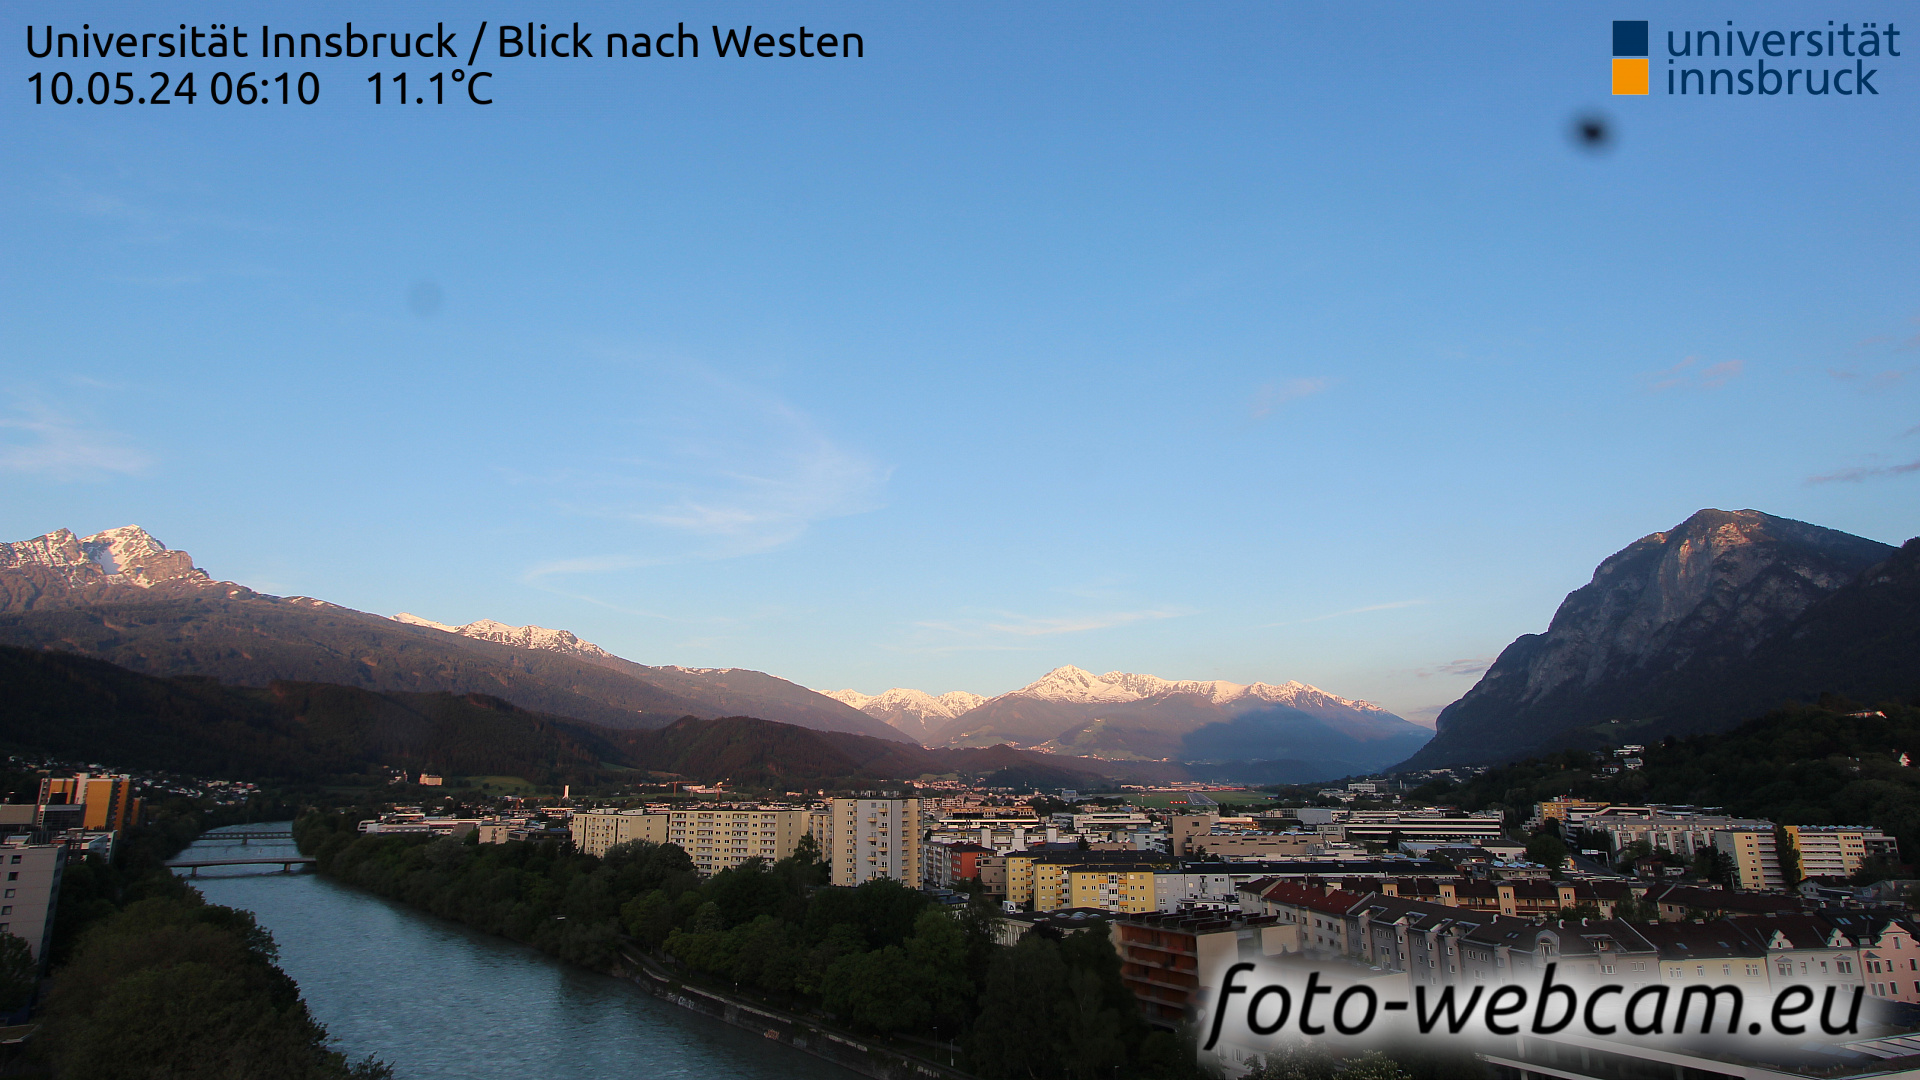 Innsbruck Fr. 06:17